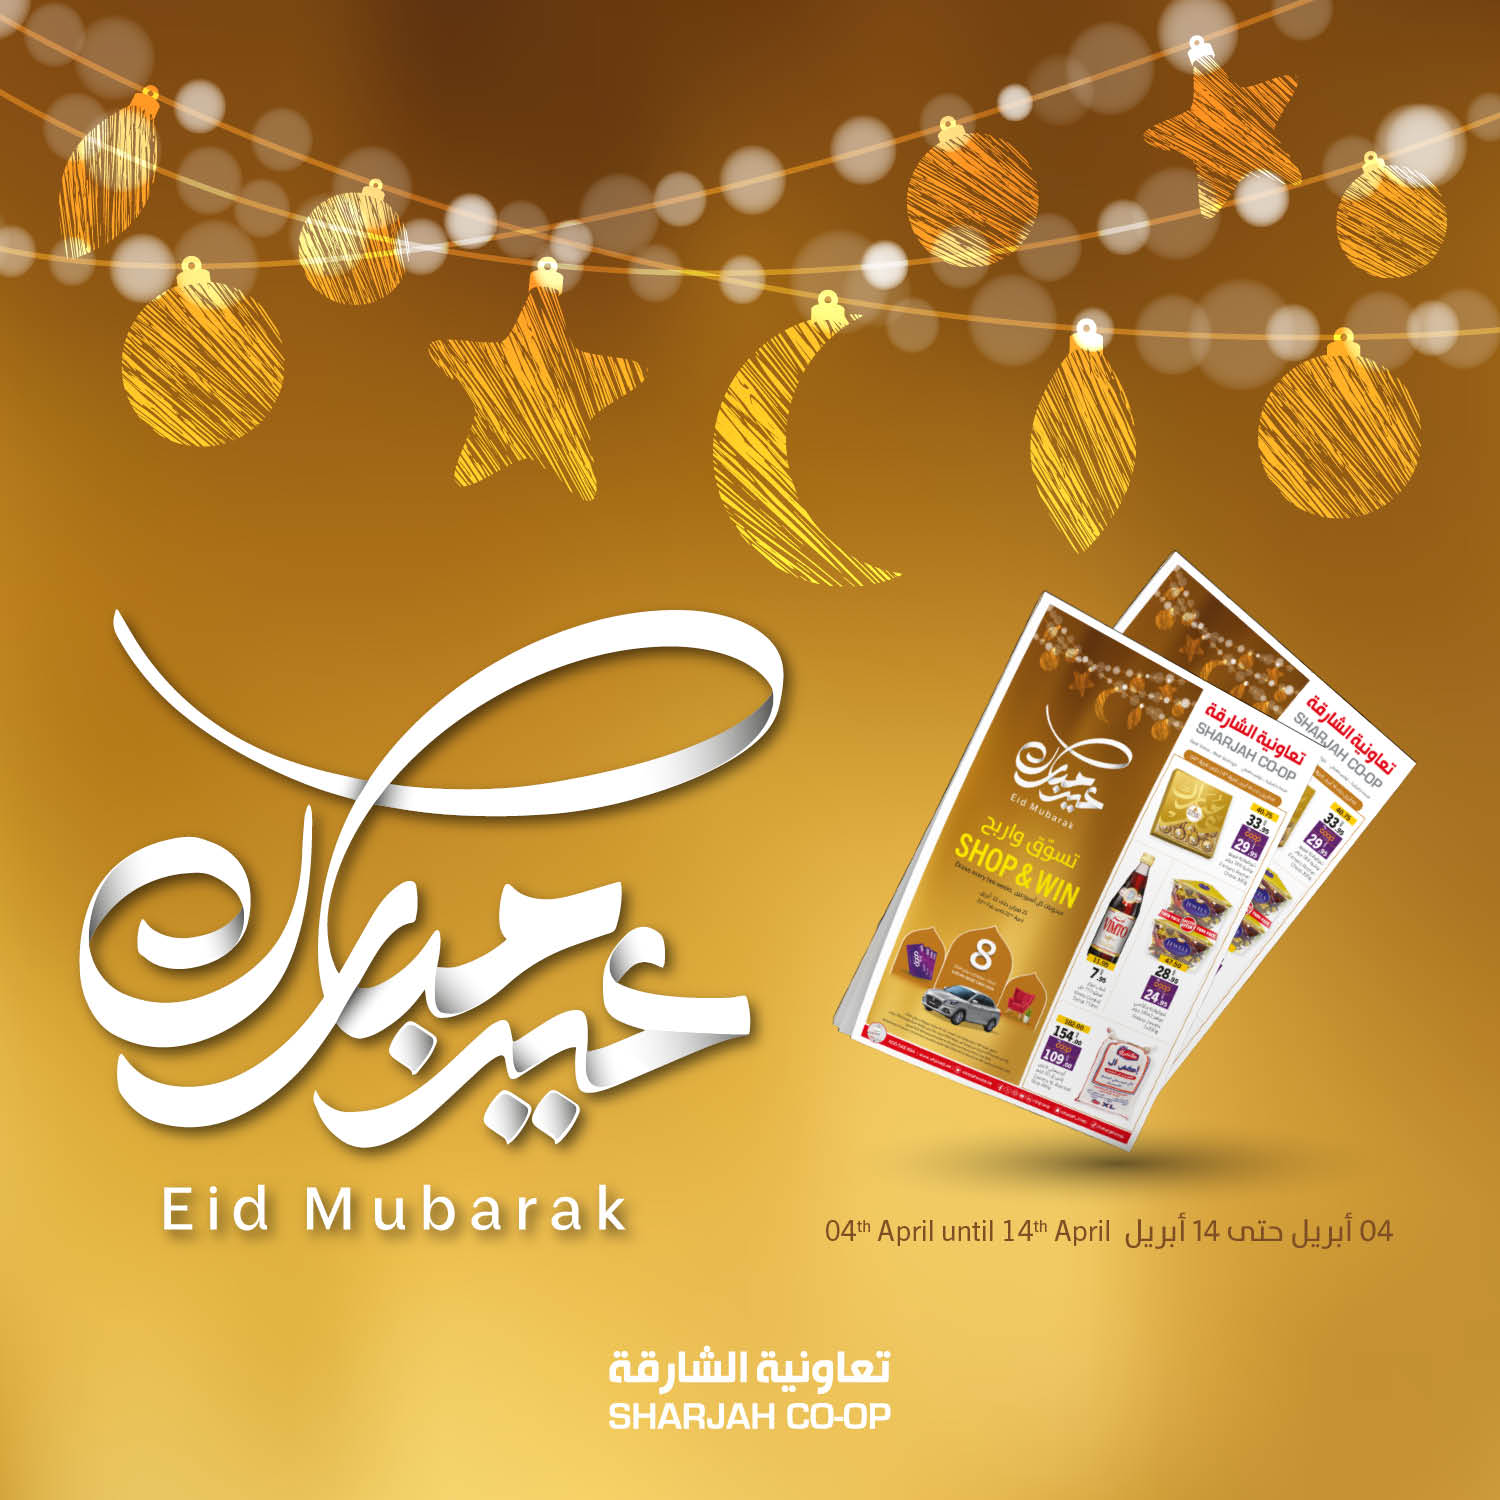 Eid Mubarak Offers 